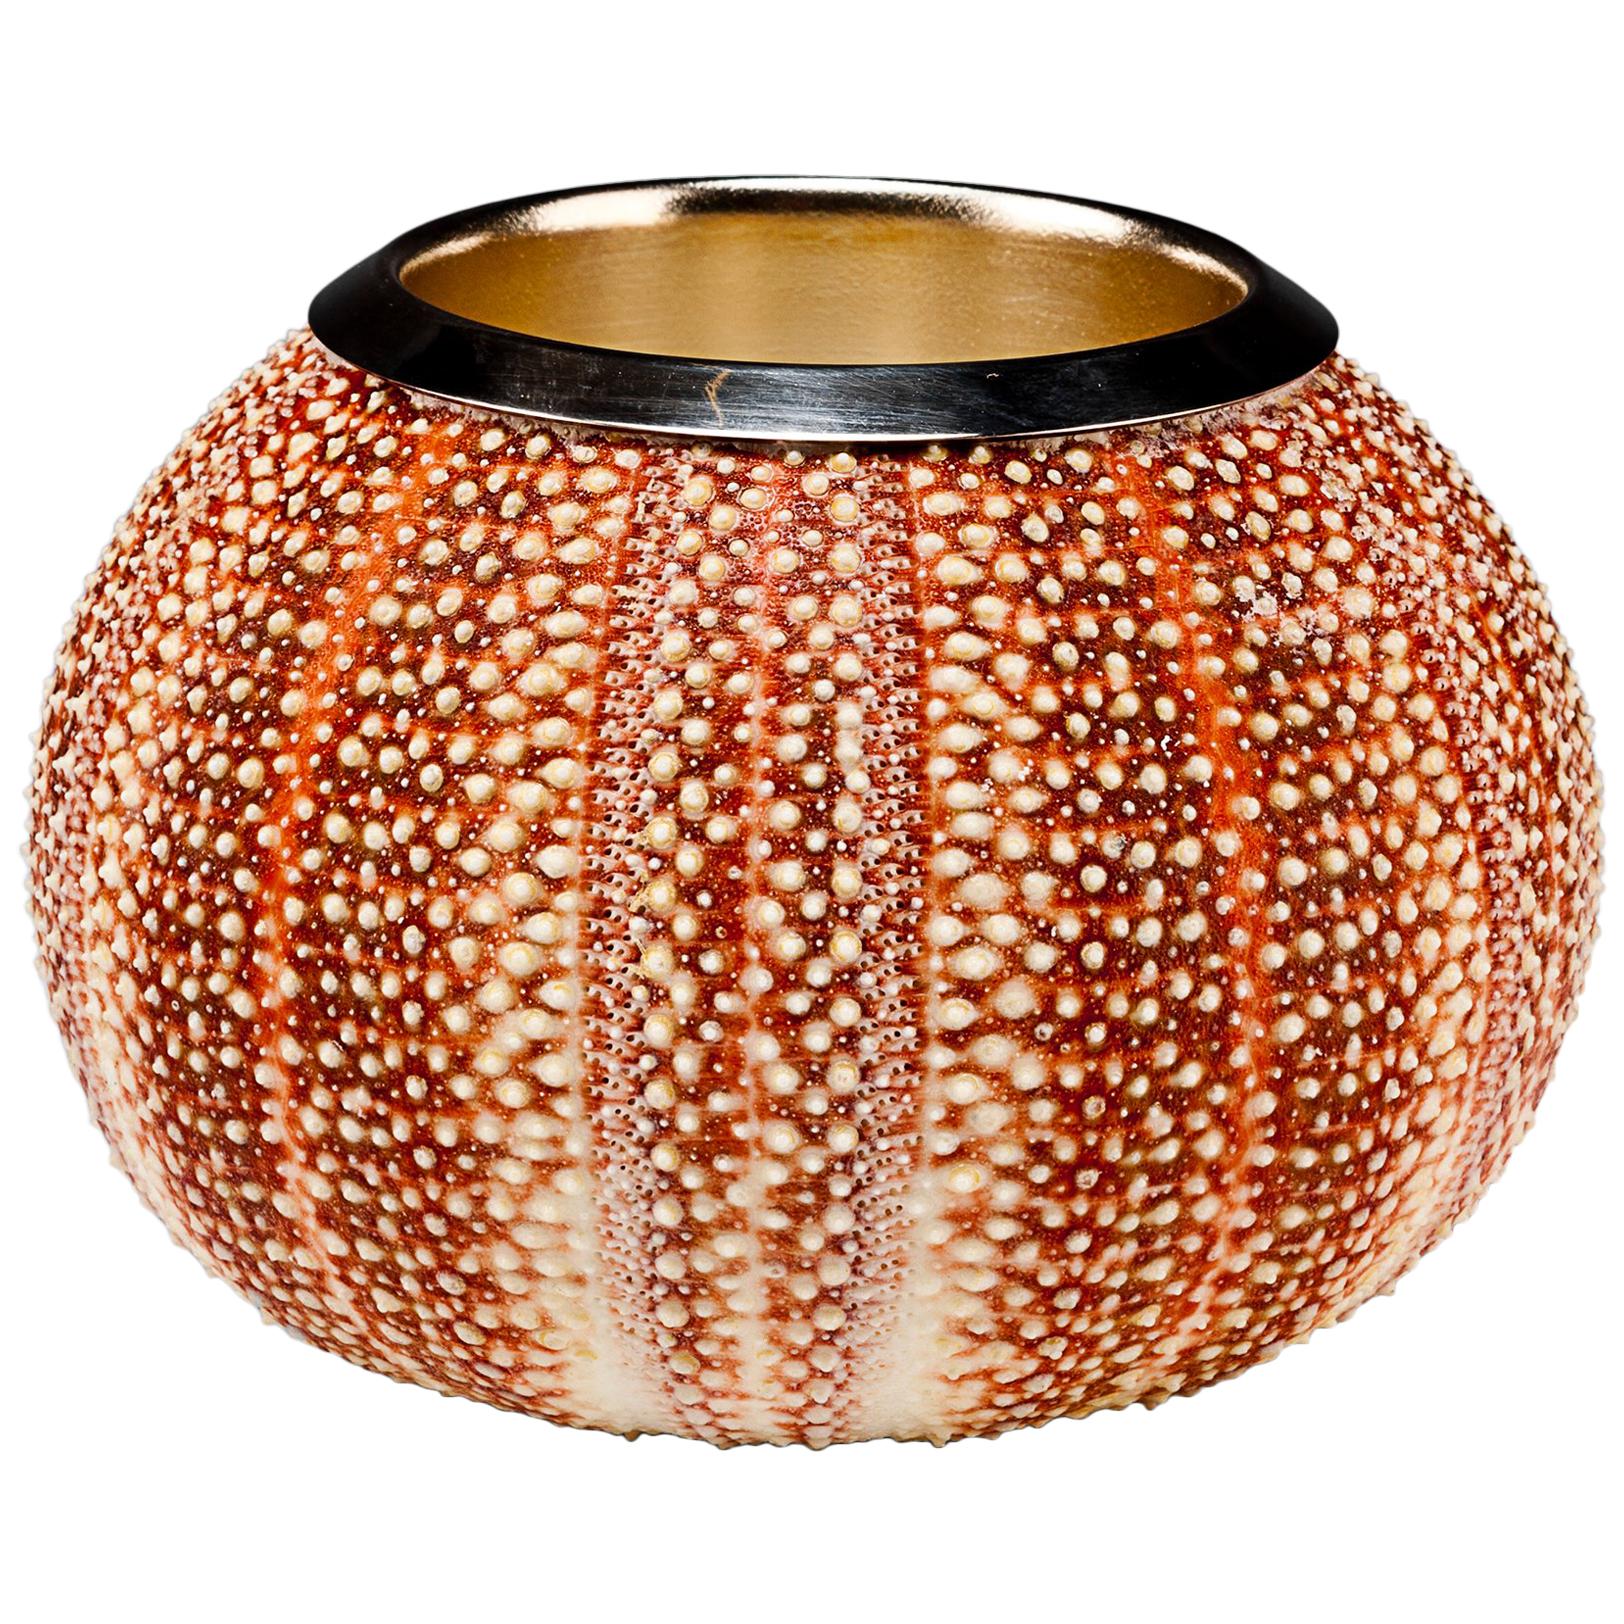 Sea Urchin Penholder with Sterling Silver Interior